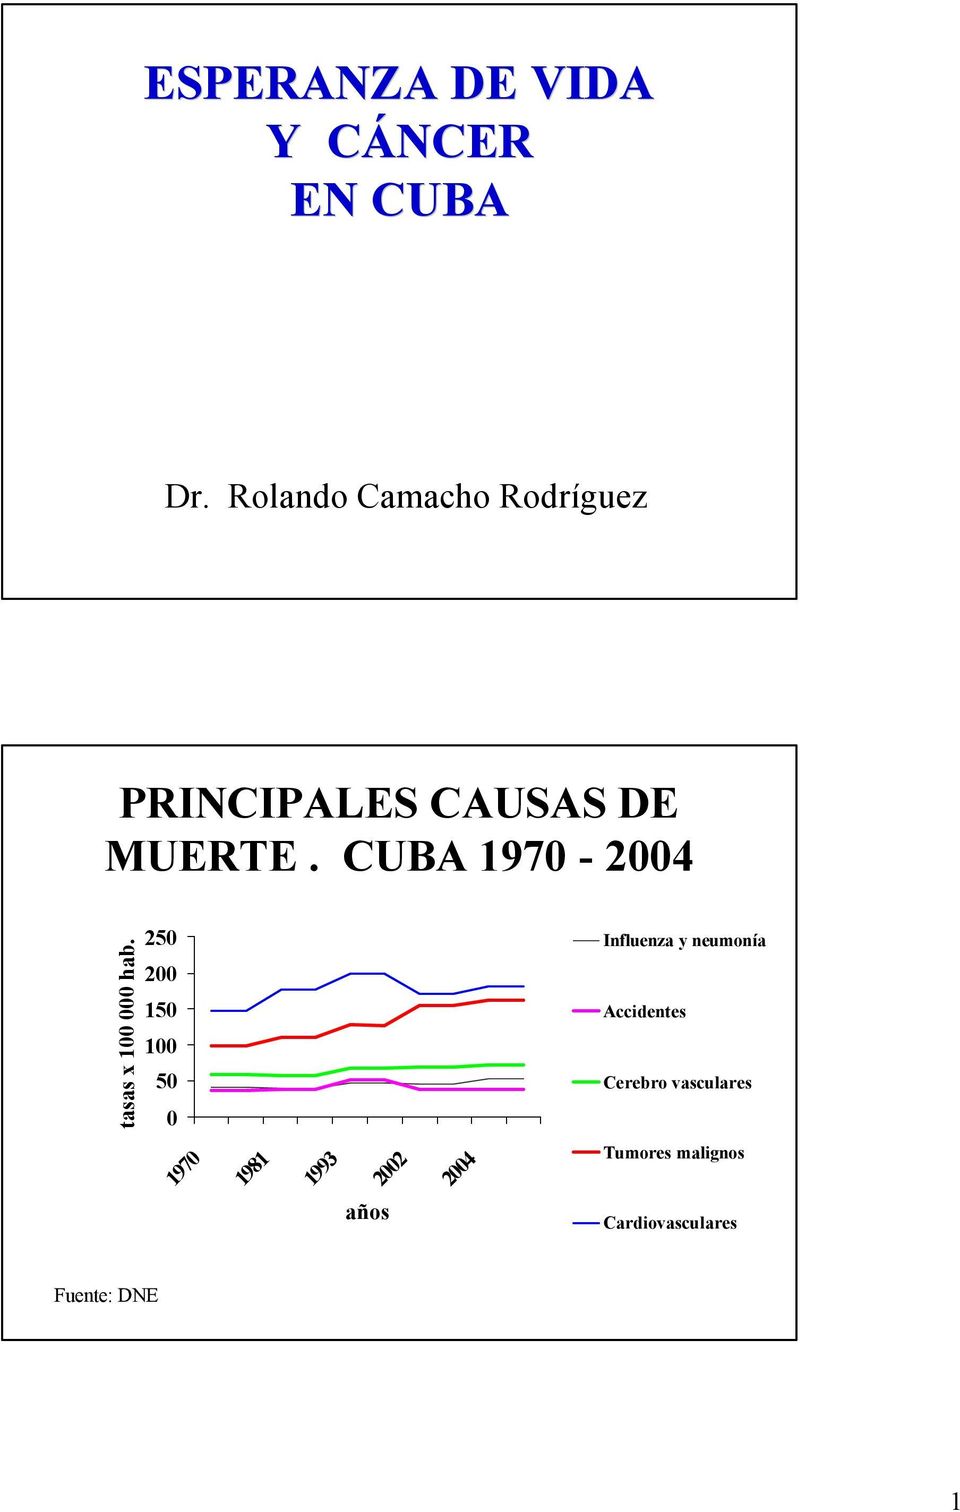 CUBA 1970-2004 tasas x 100 000 hab.